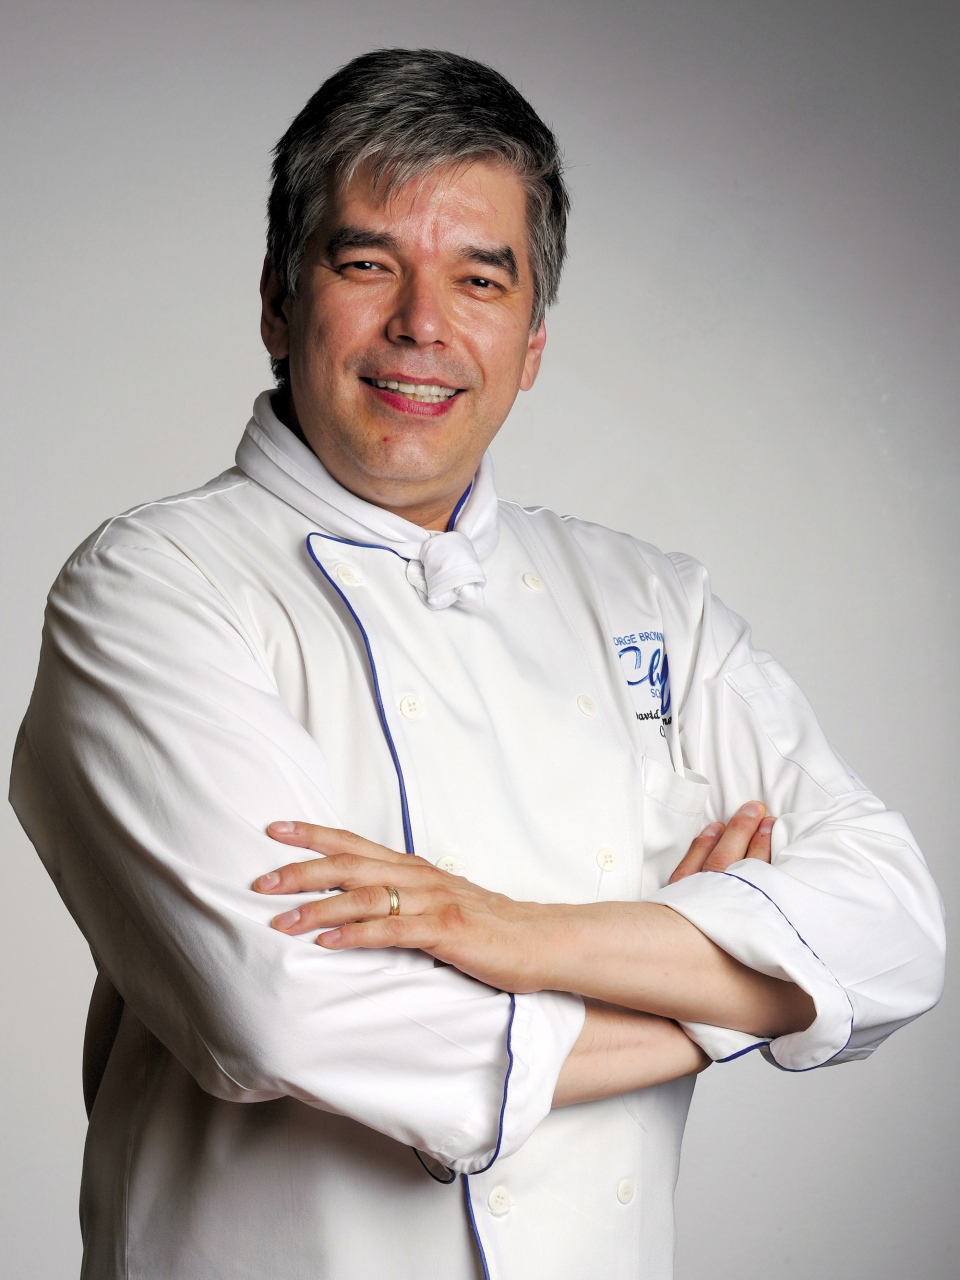 Chef David Wolfman